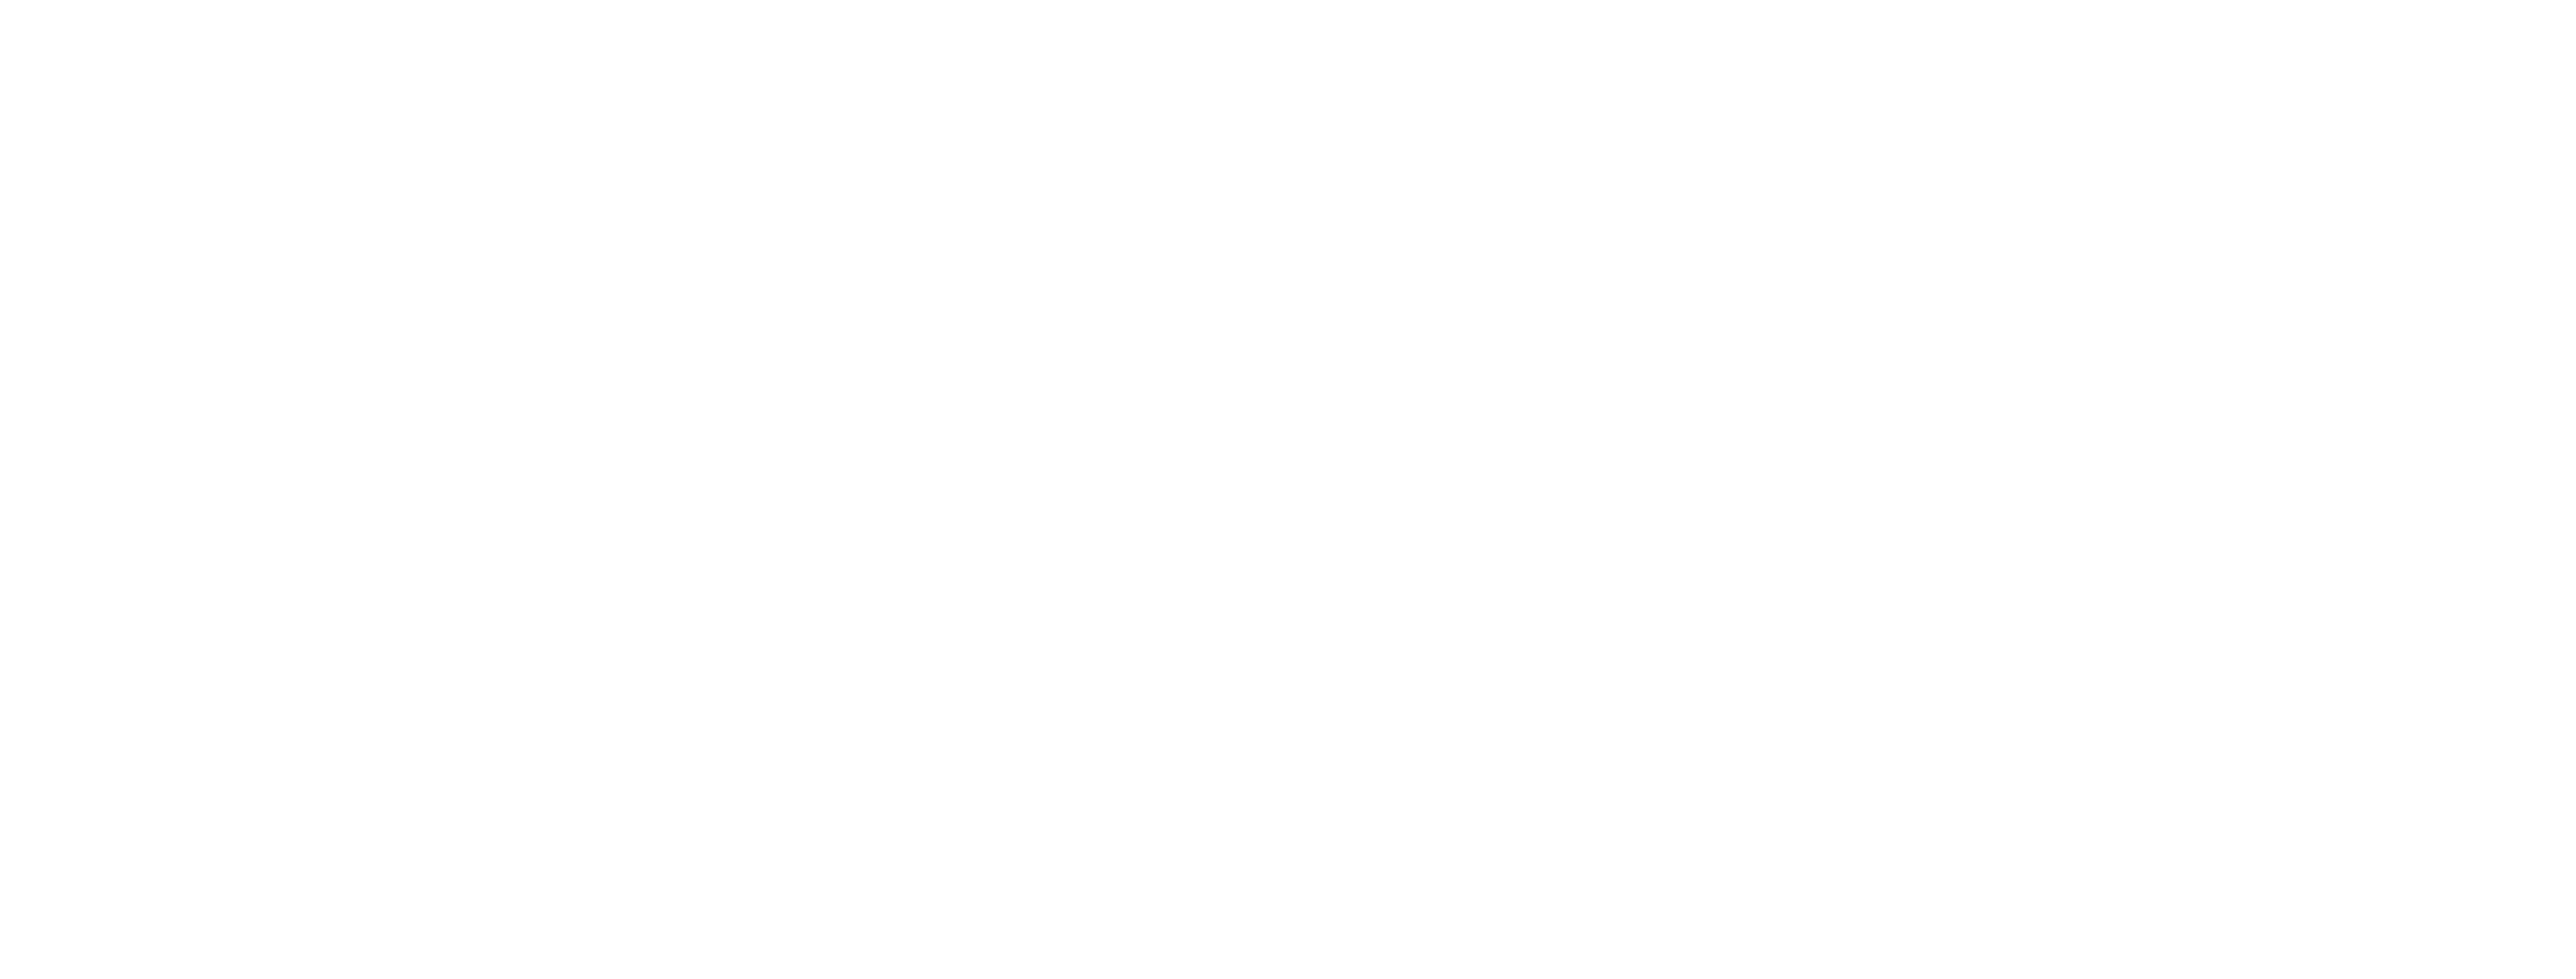 health overdose logo